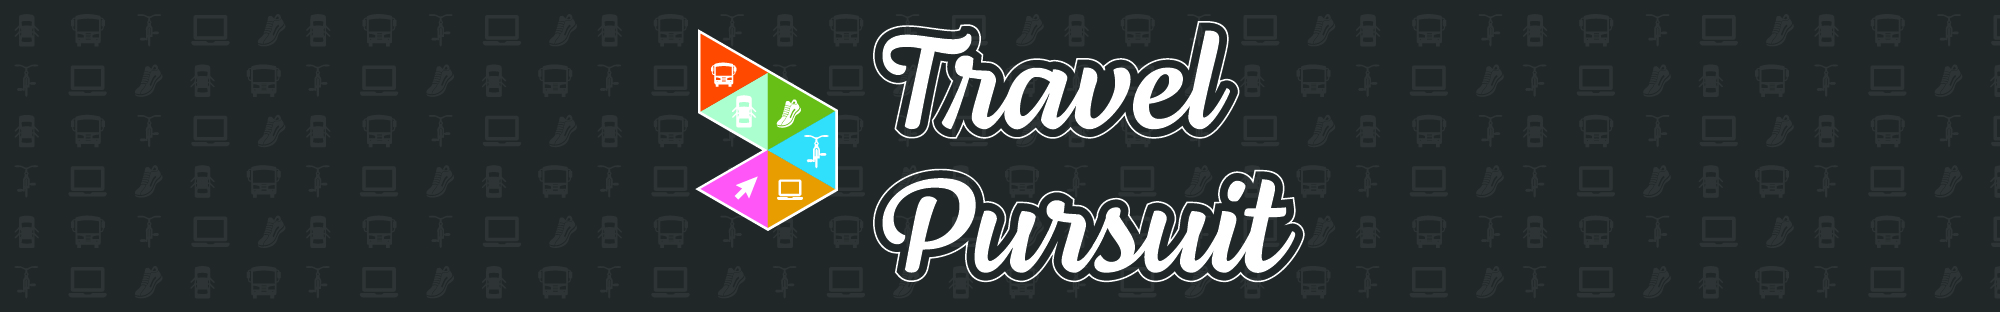 Travel Pursuit Header image